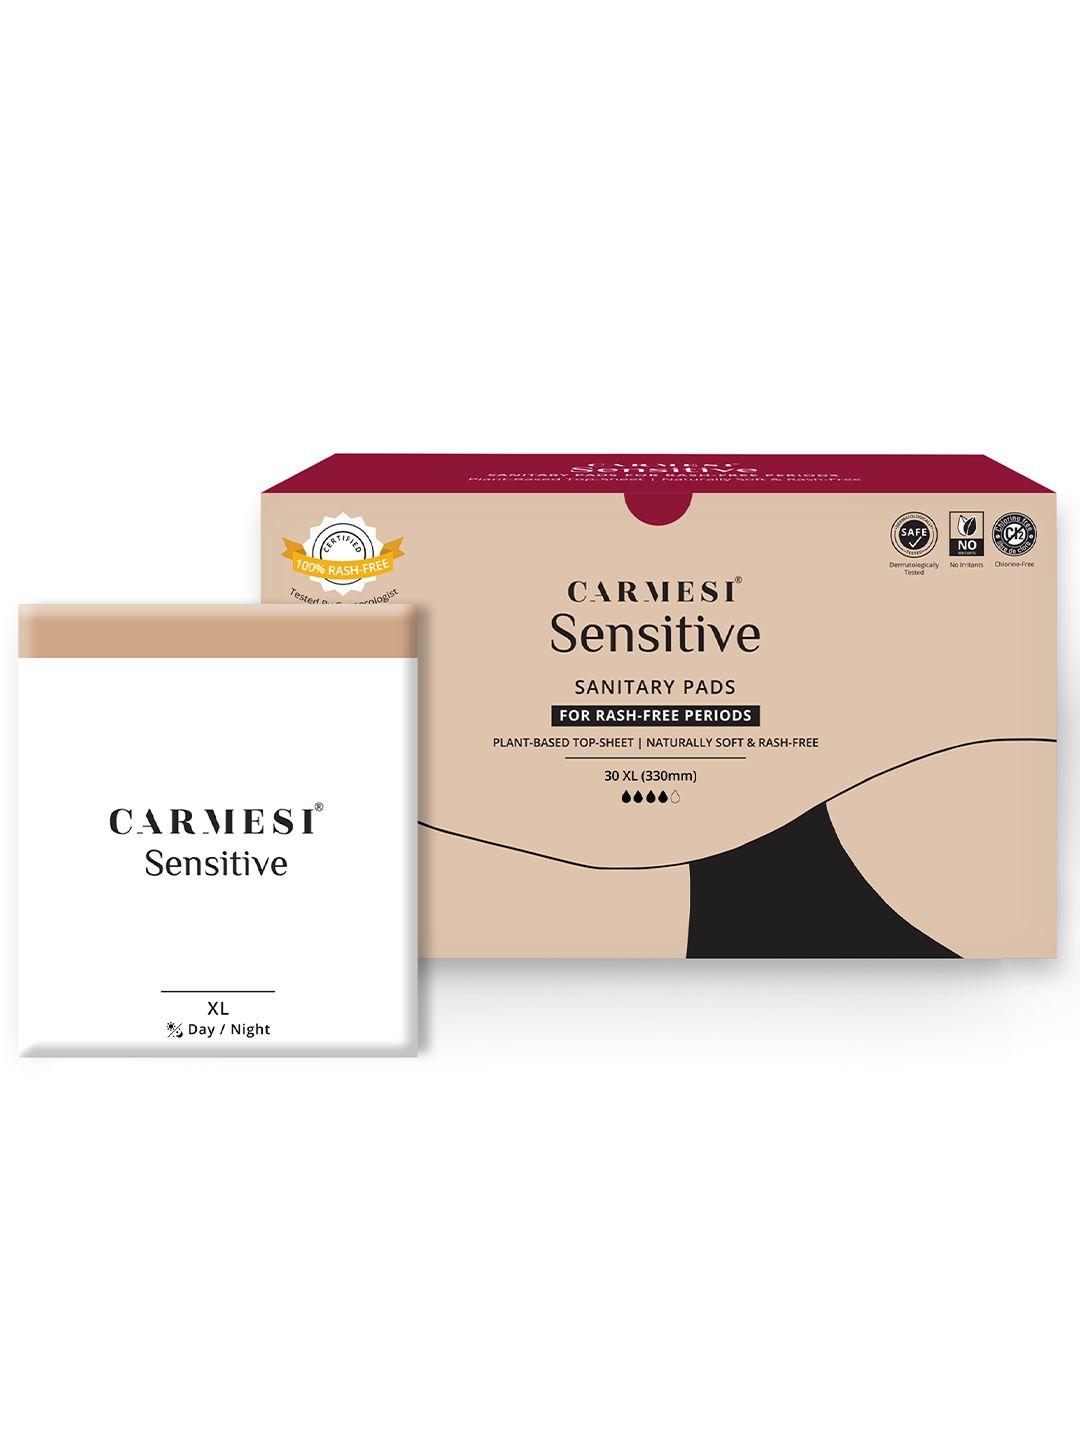 carmesi sensitive sanitary pads - 30 pads - 30 xl